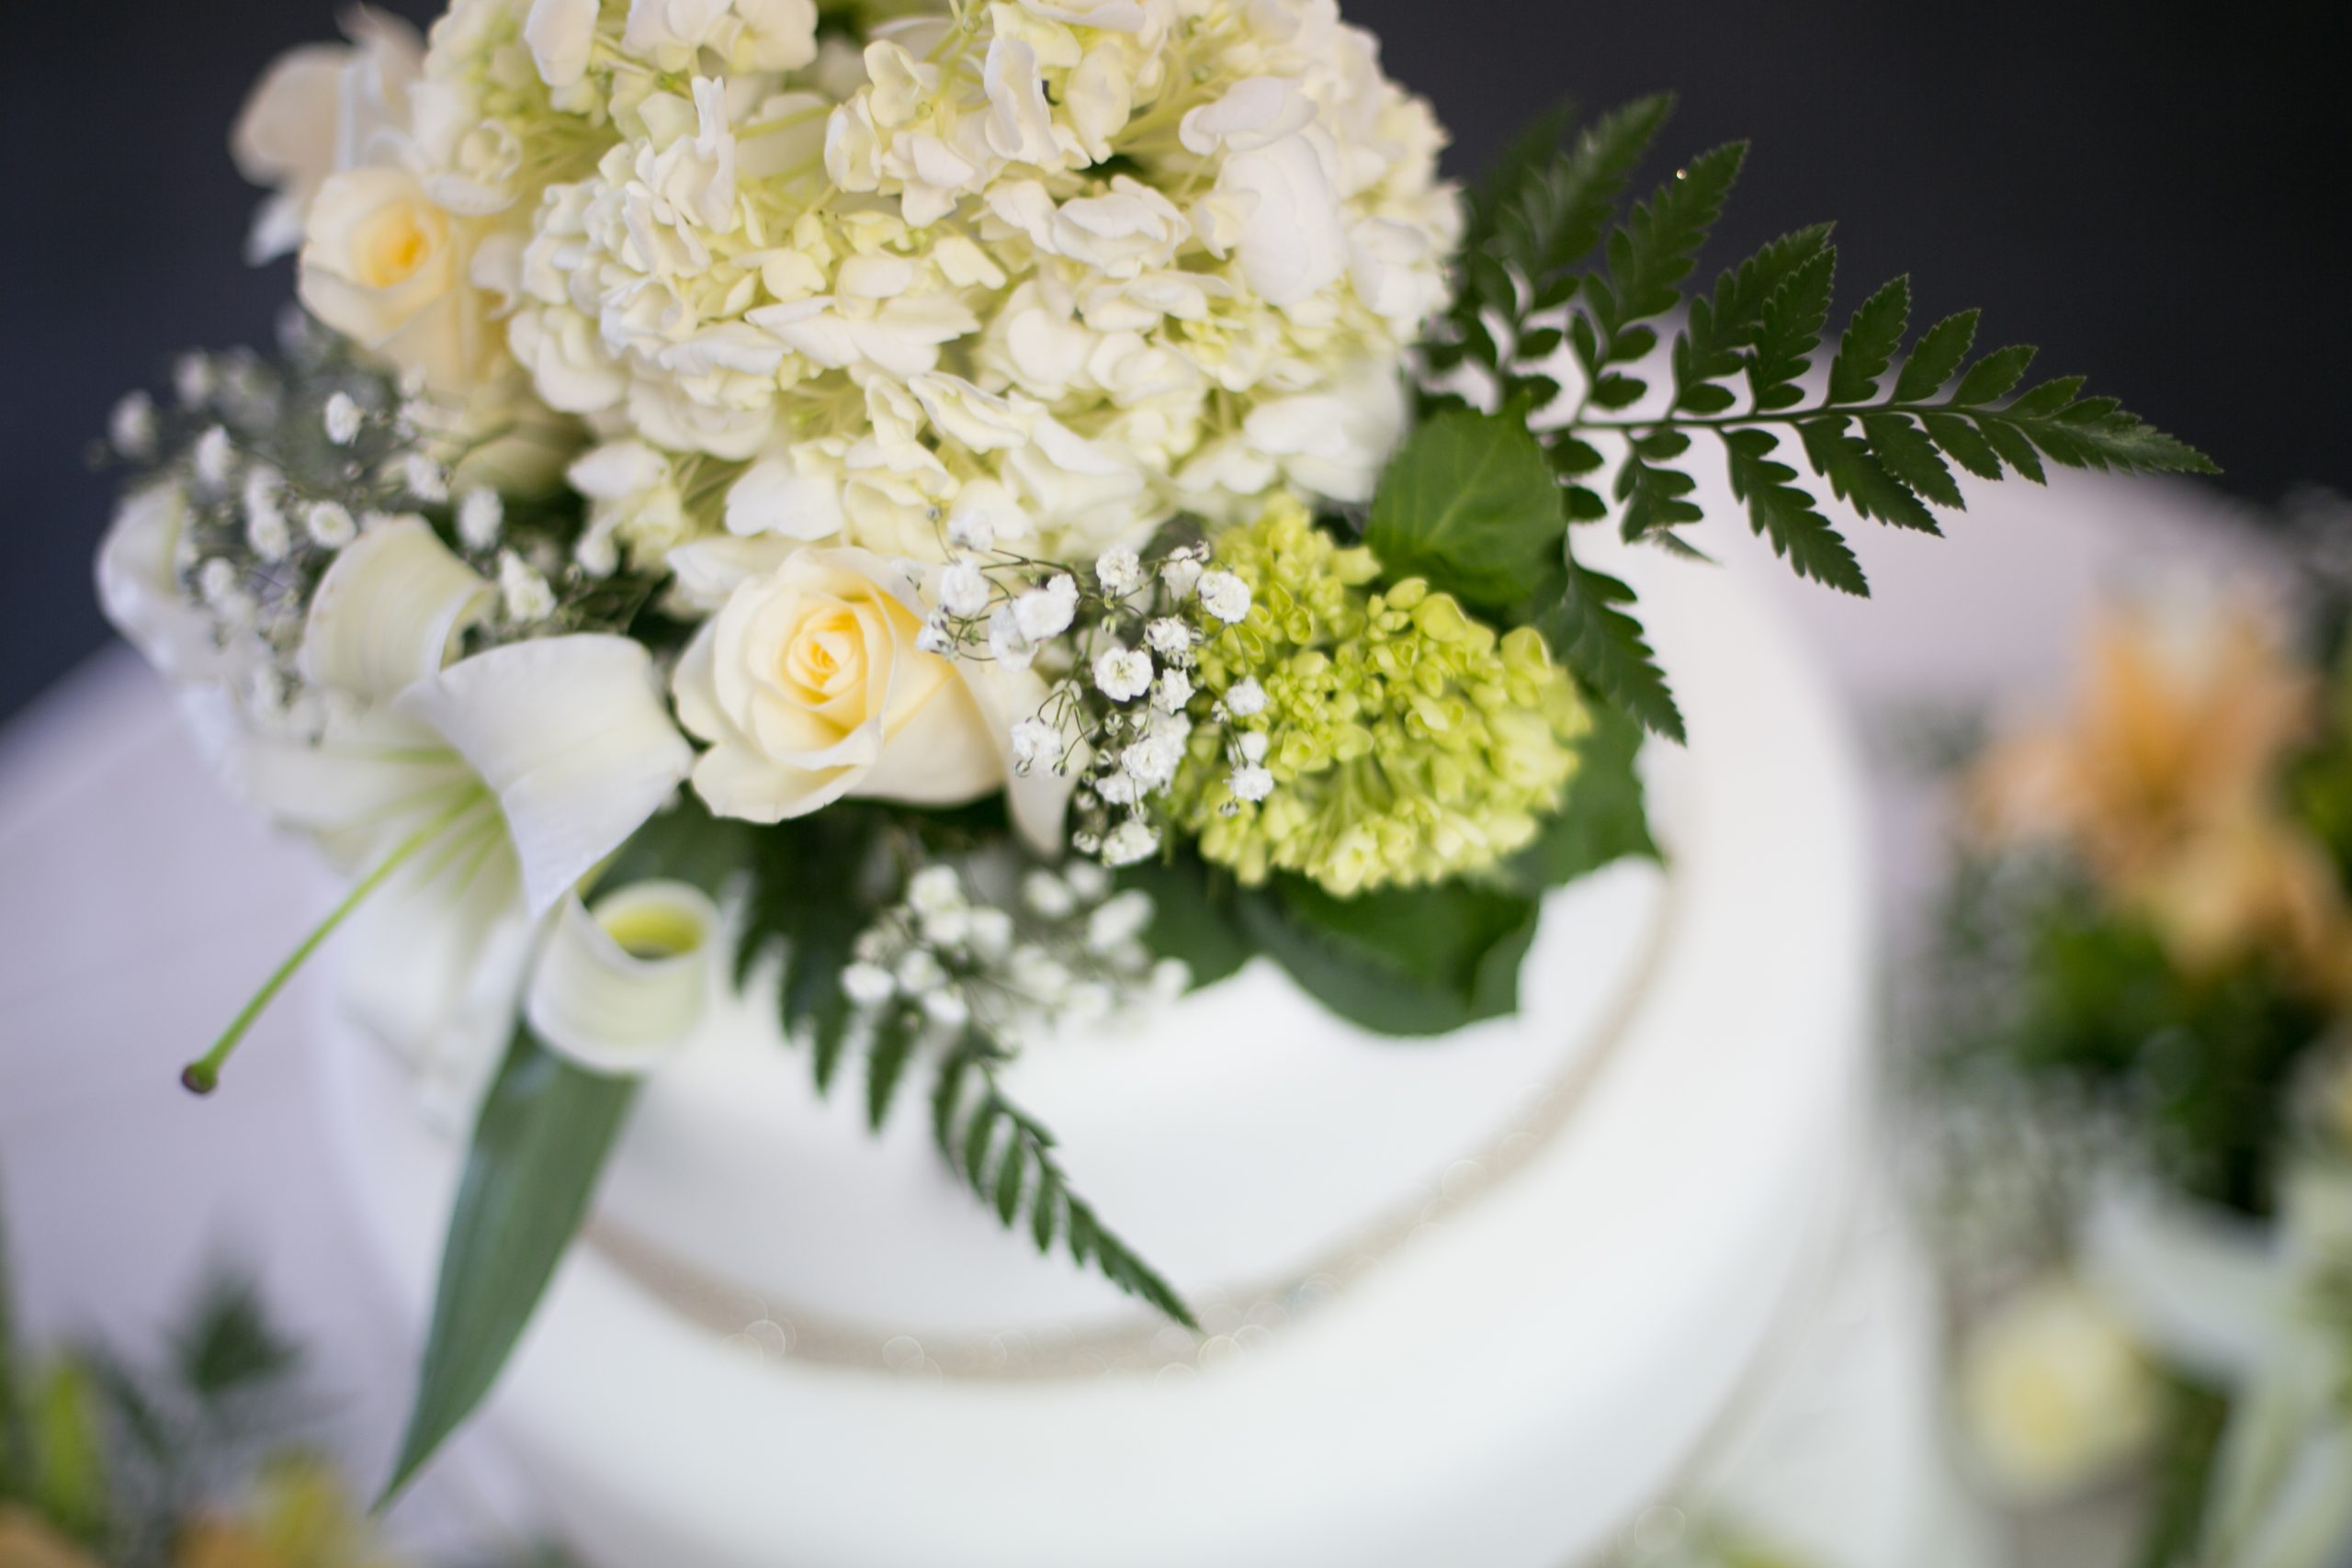 ragged wedding cake floral